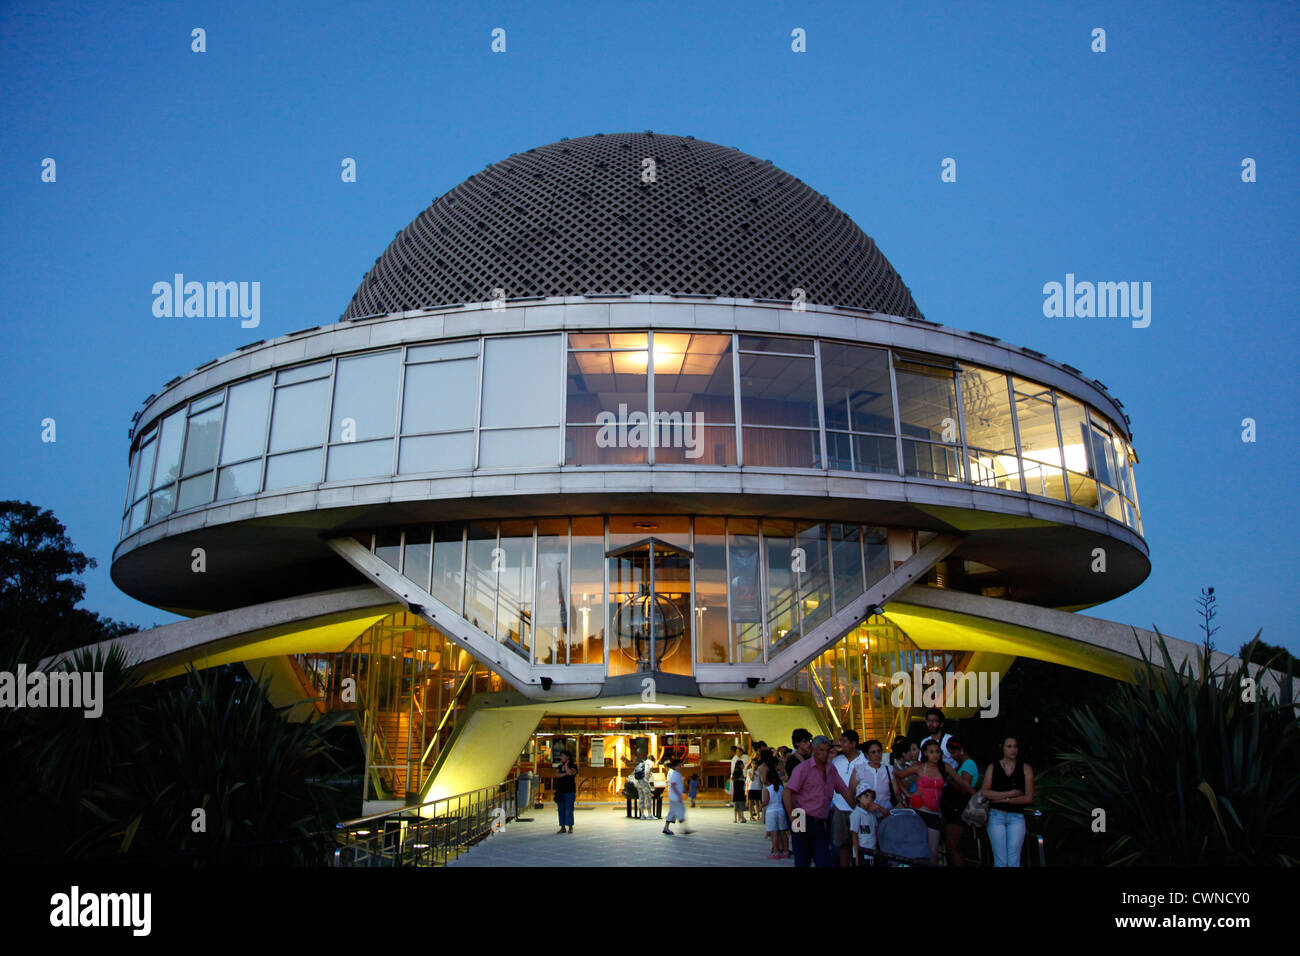 Buenos aires palermo park fotografías e imágenes de alta resolución - Alamy